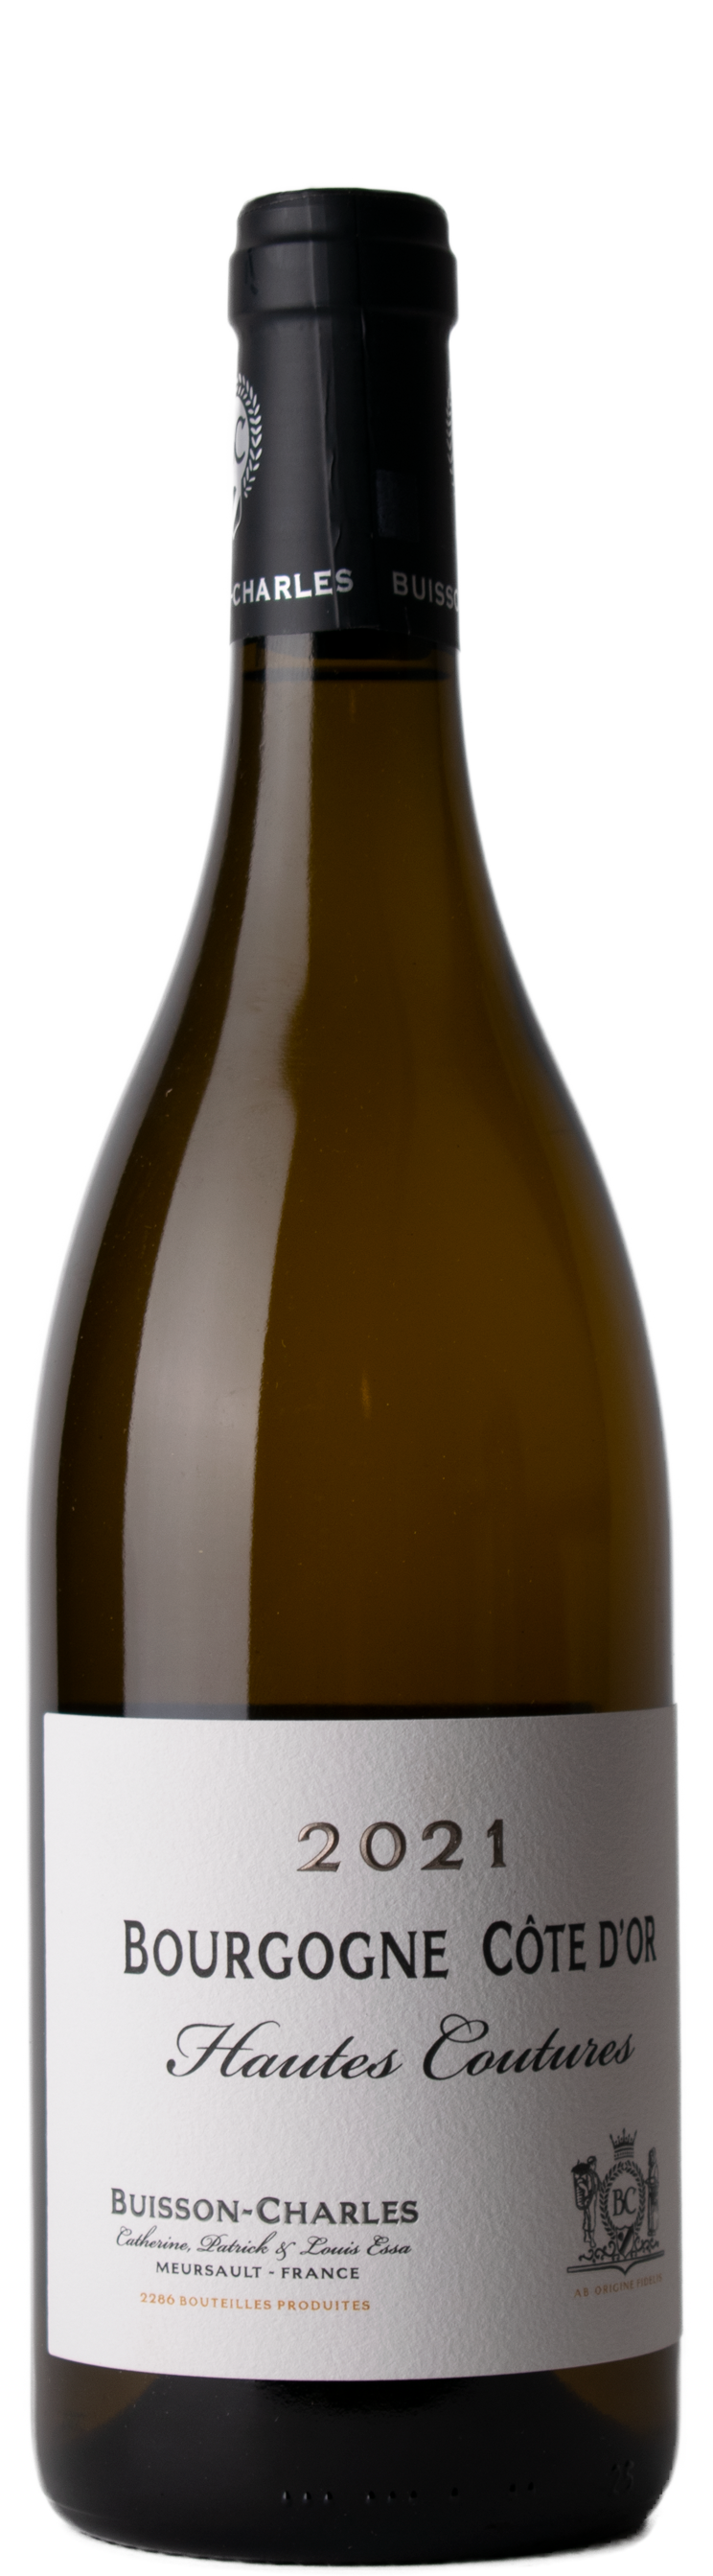 Bourgogne Chardonnay 2021 Hautes Coutures blanc